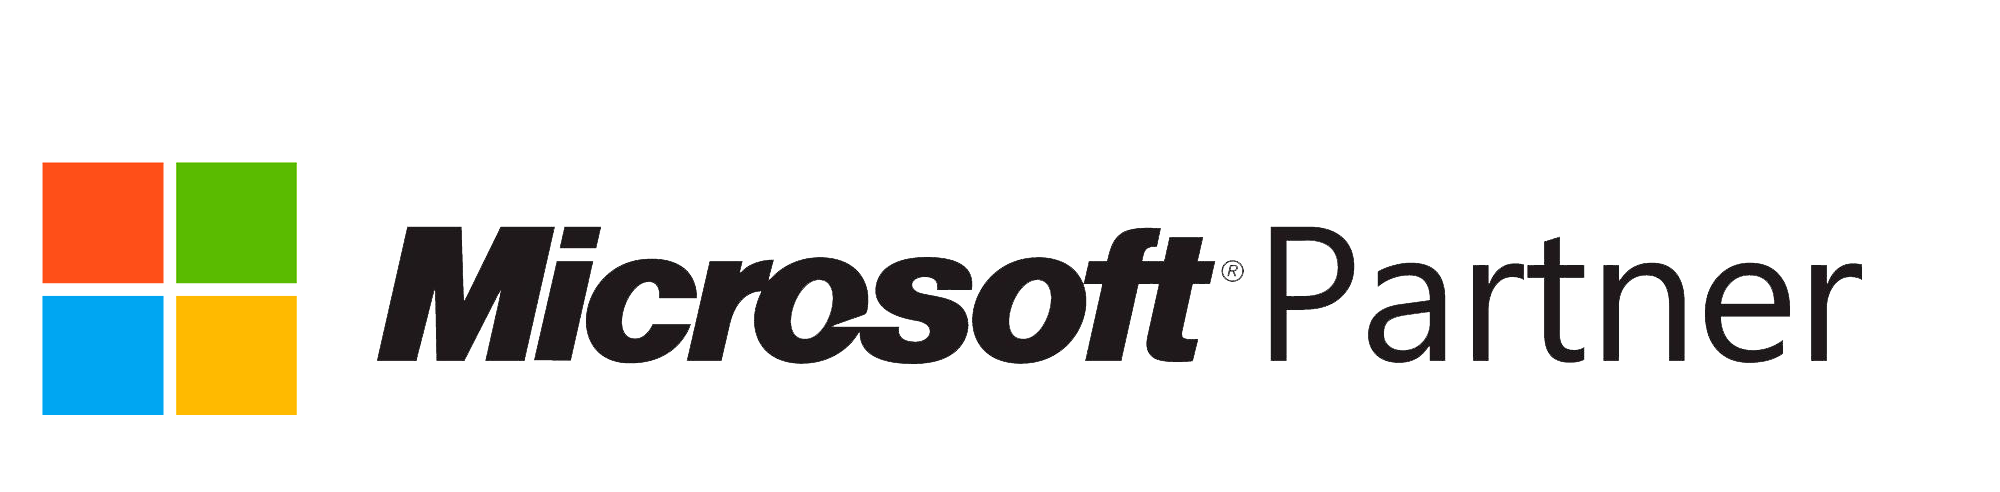 Microsoft Certified Partner Logo Png